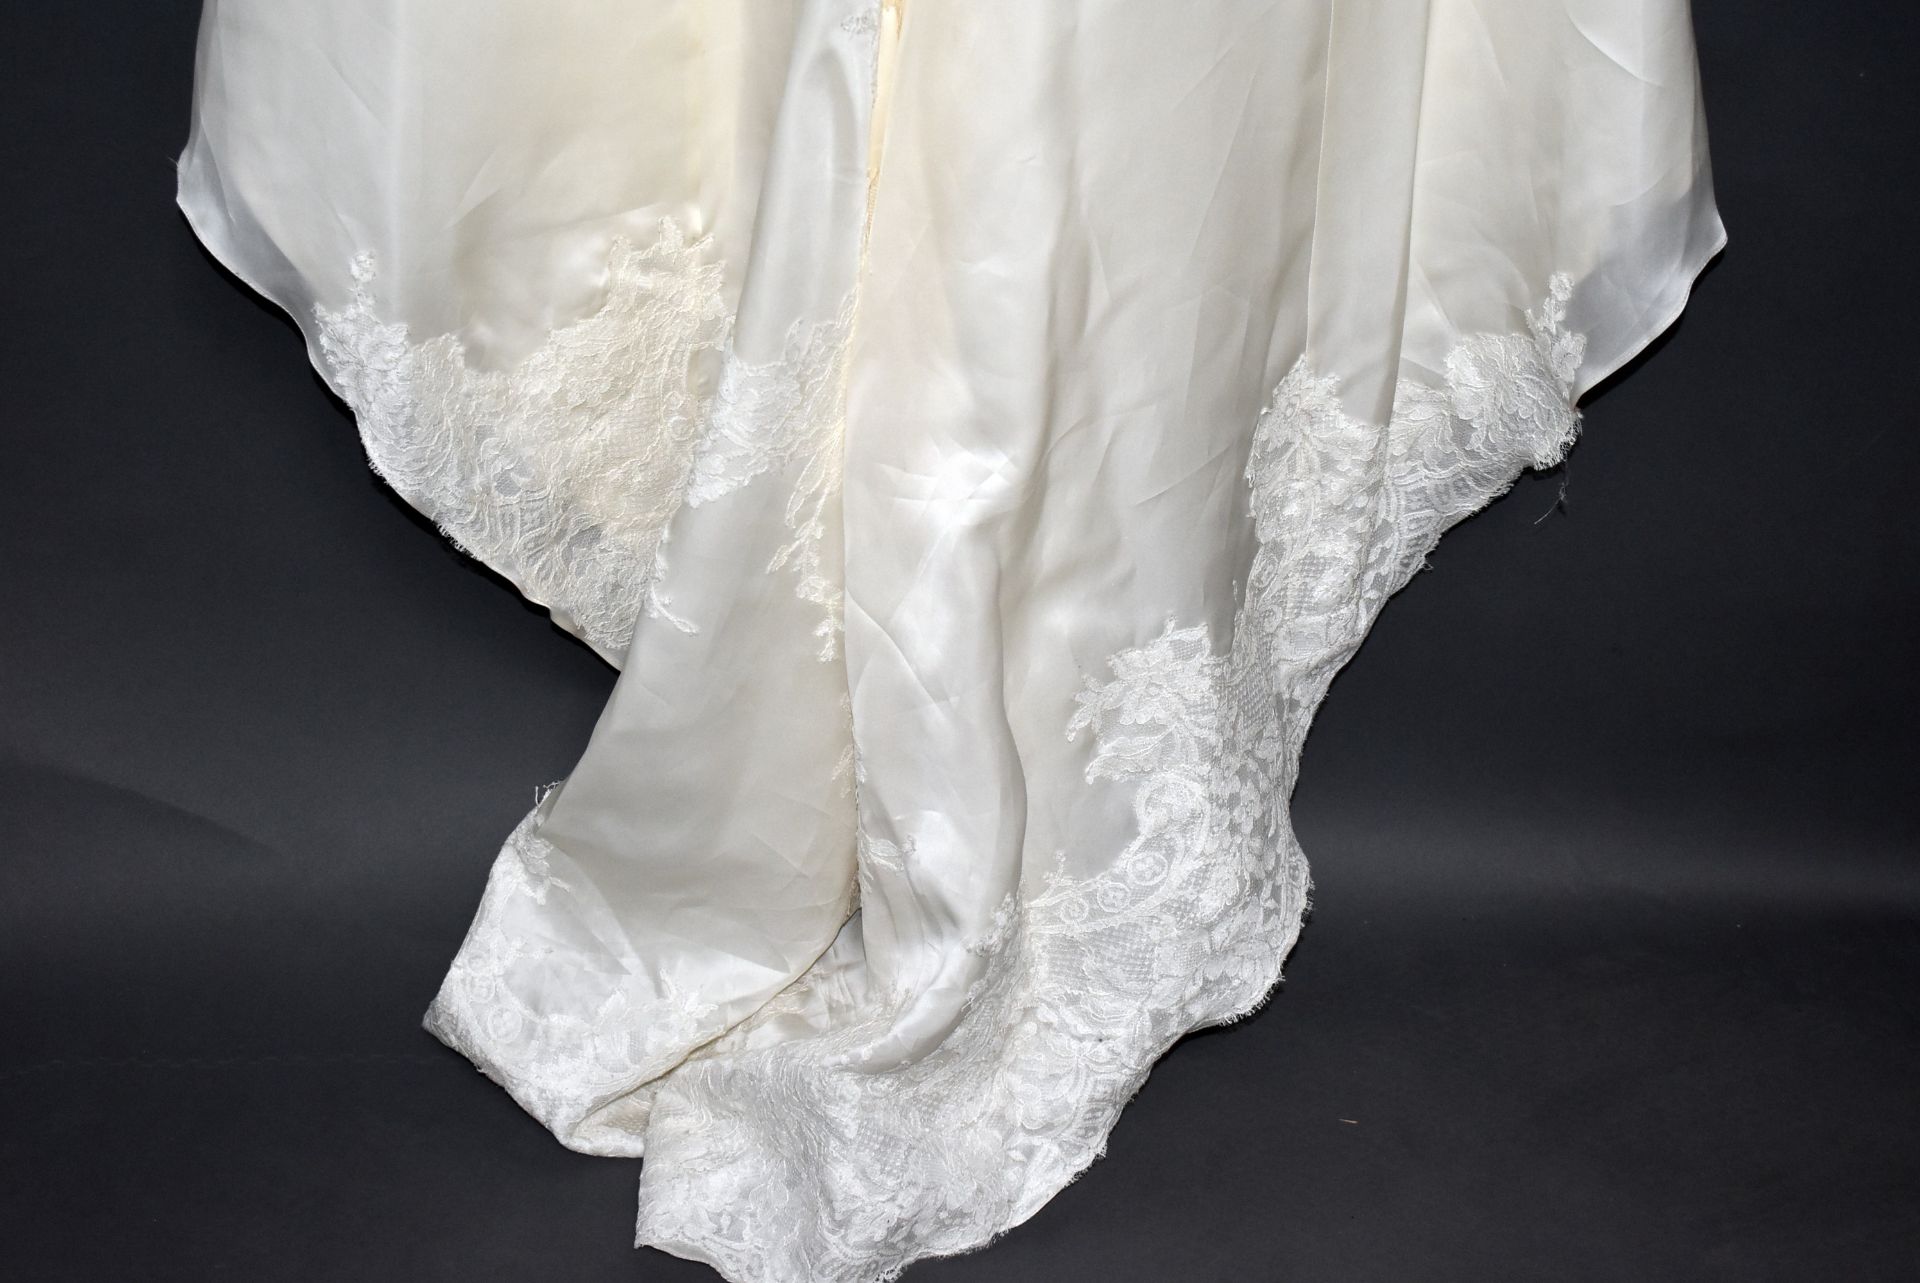 1 x ALAN HANNAH Strapless Lace & Satin Fishtail Dress Designer Wedding Dress Bridal RRP £2,700 UK 14 - Image 7 of 7